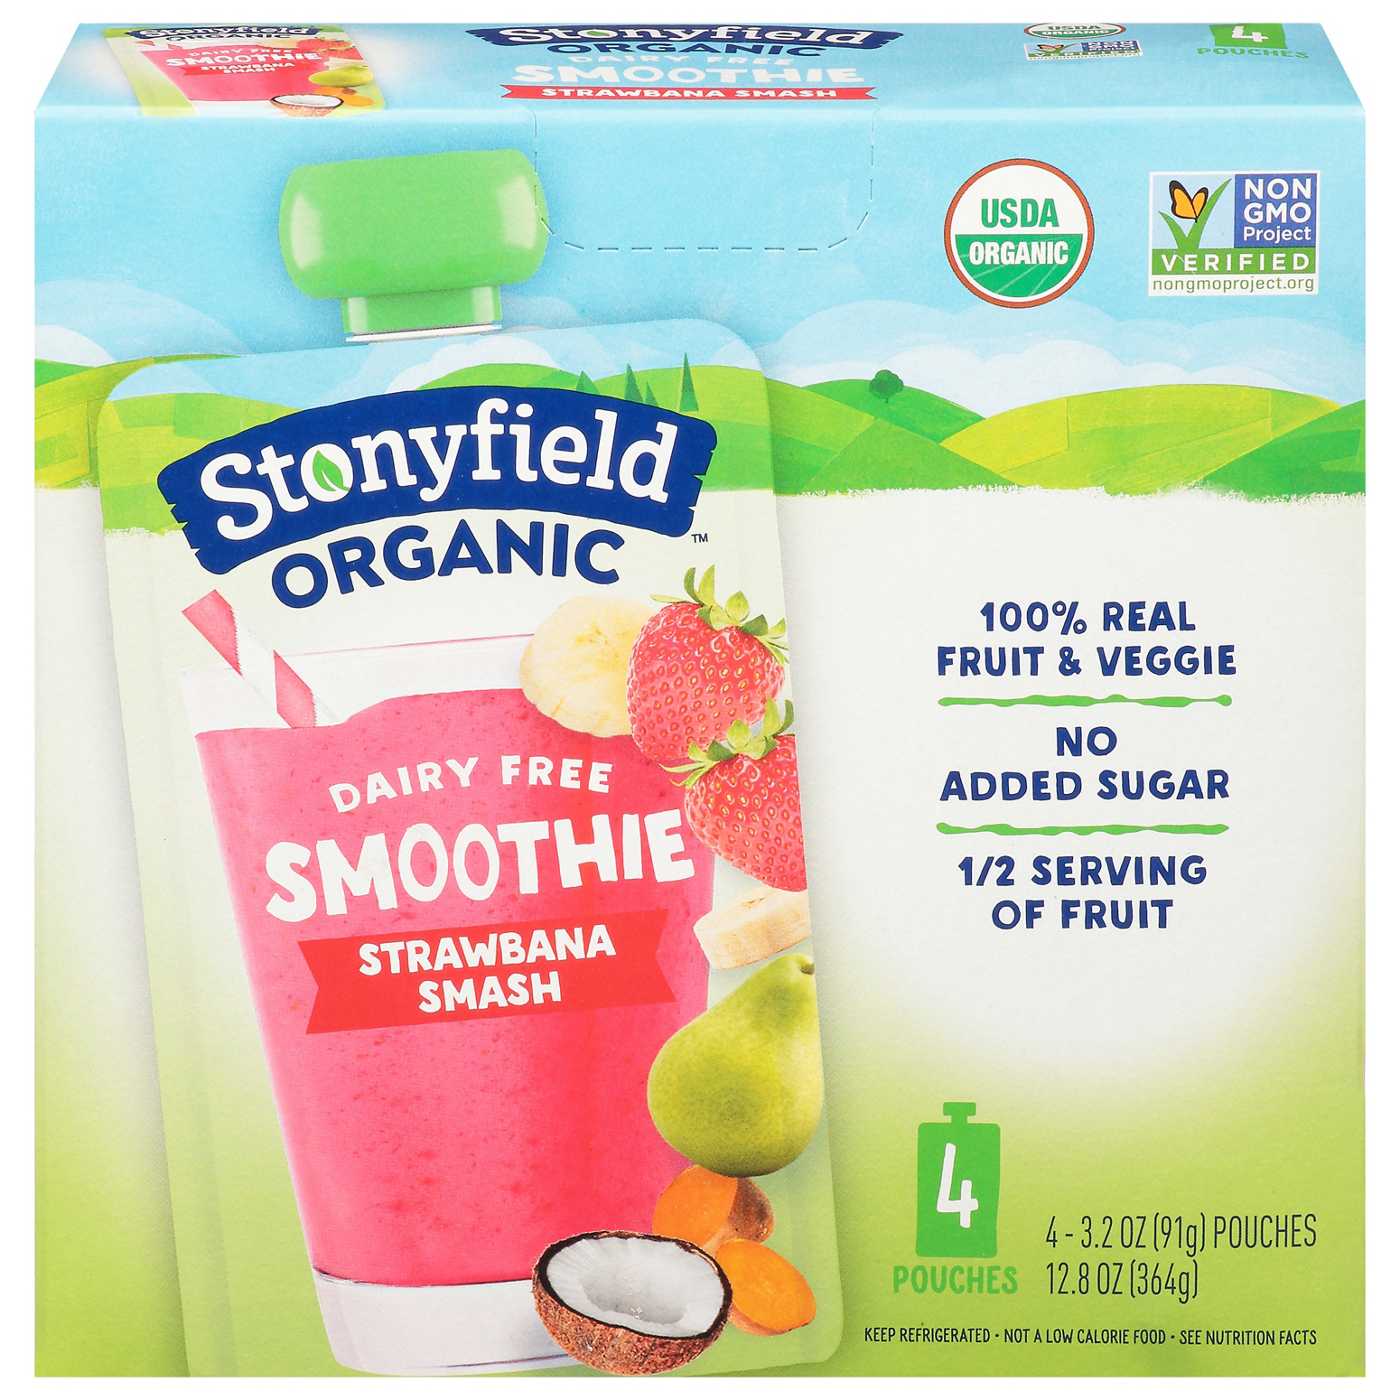 Stonyfield Organic Dairy-Free Strawbana Smash Smoothie Pouches; image 1 of 2